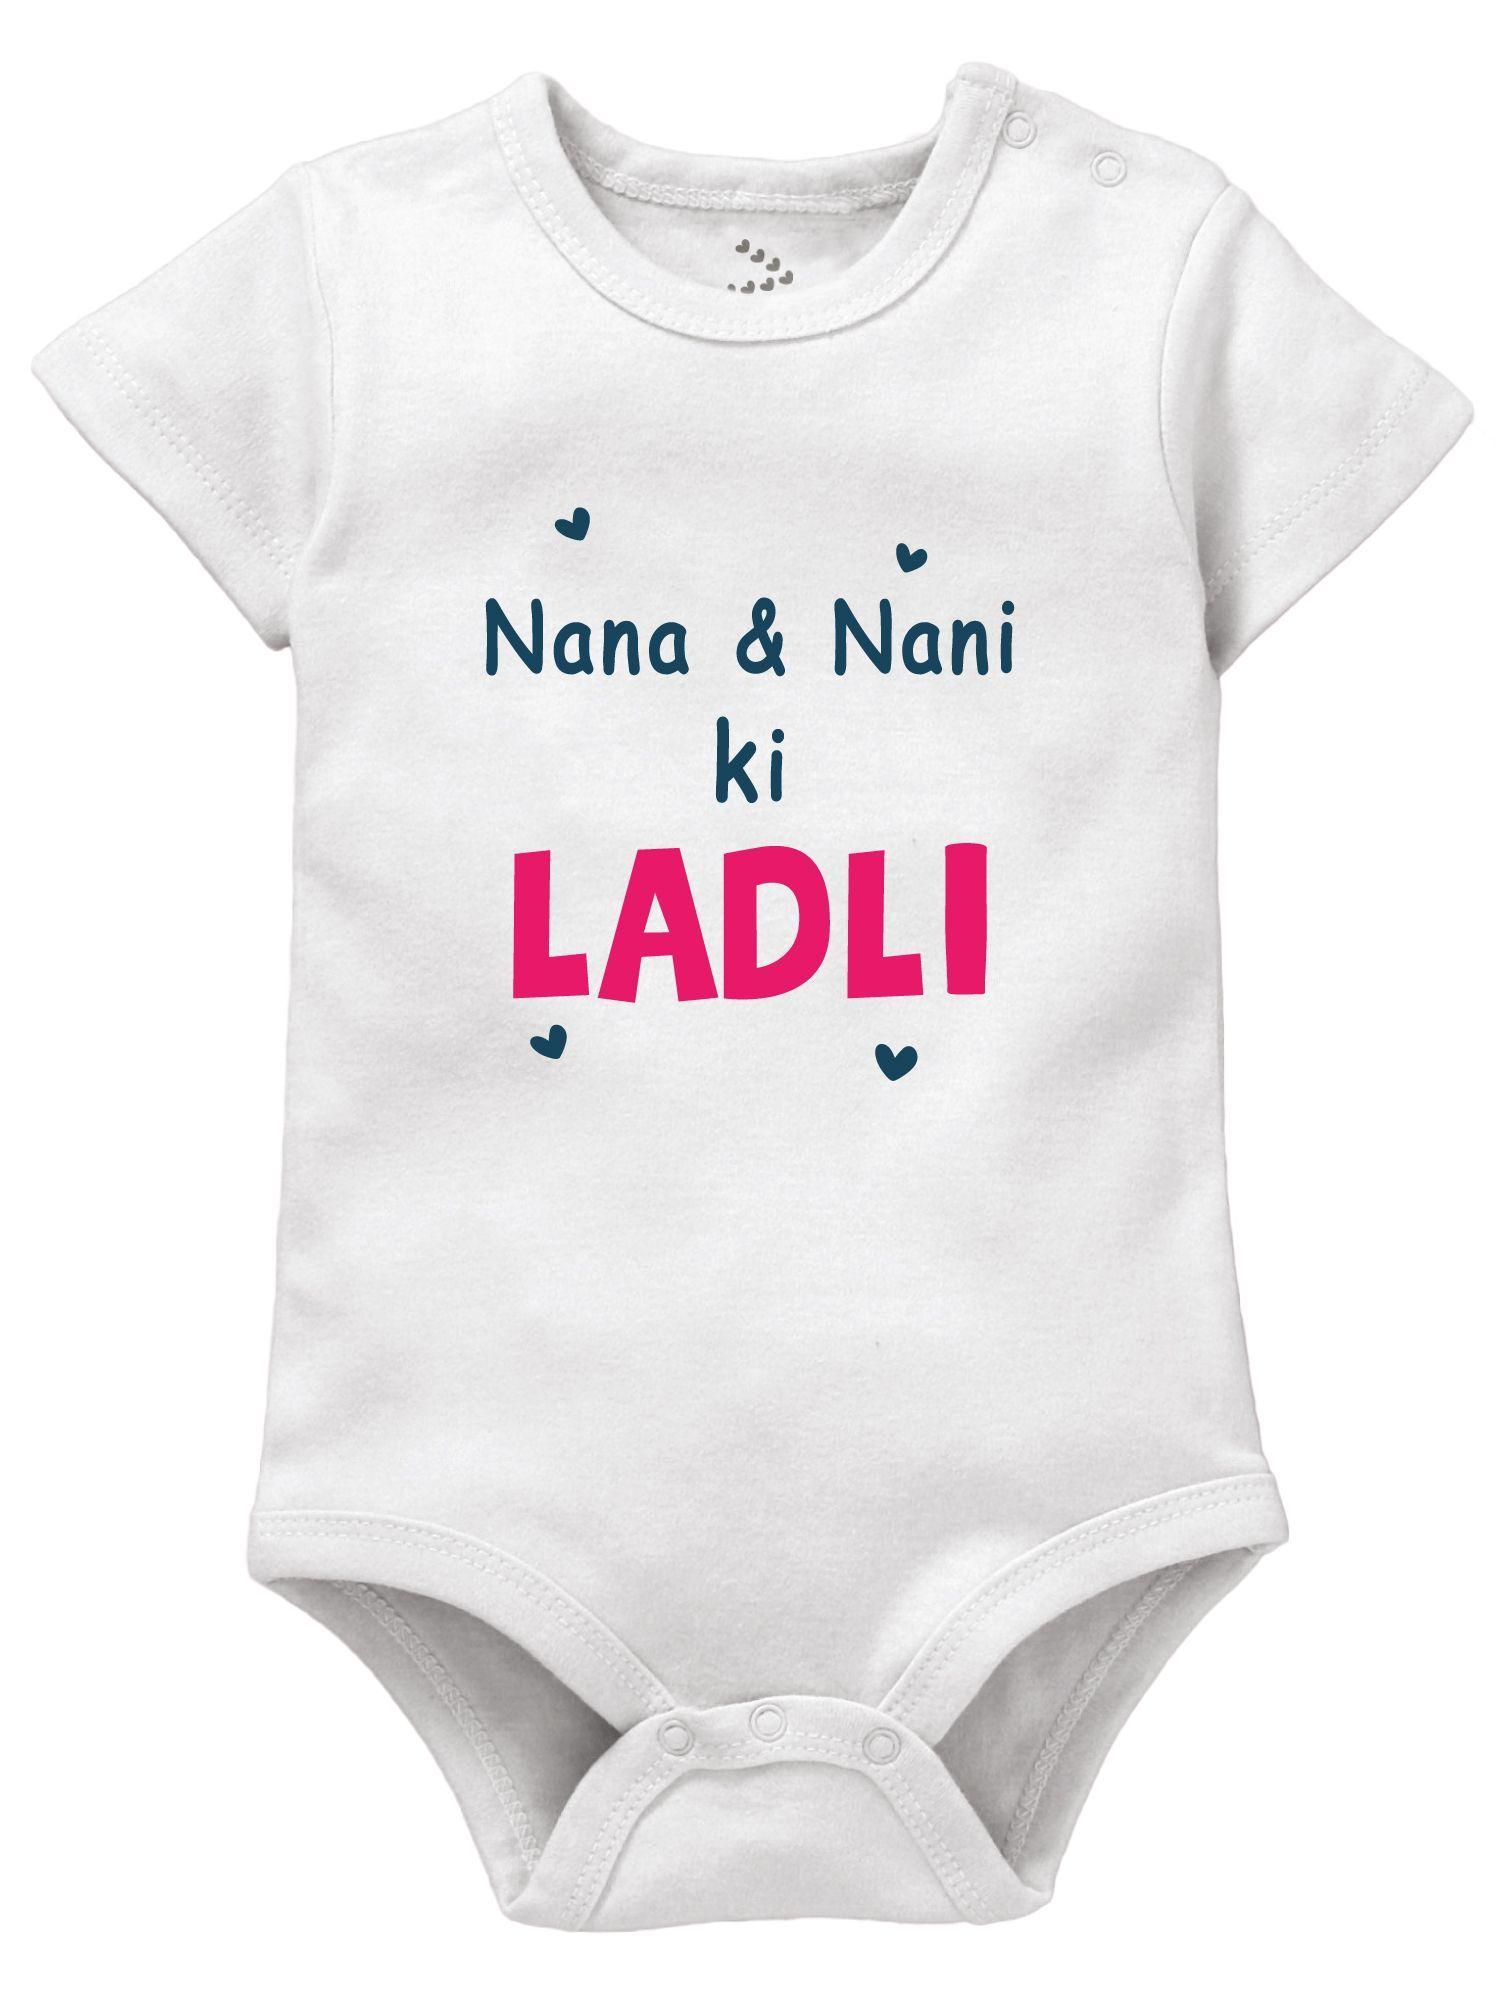 nana & nani ki ladli newborn baby romper clothes nana nani & baby theme